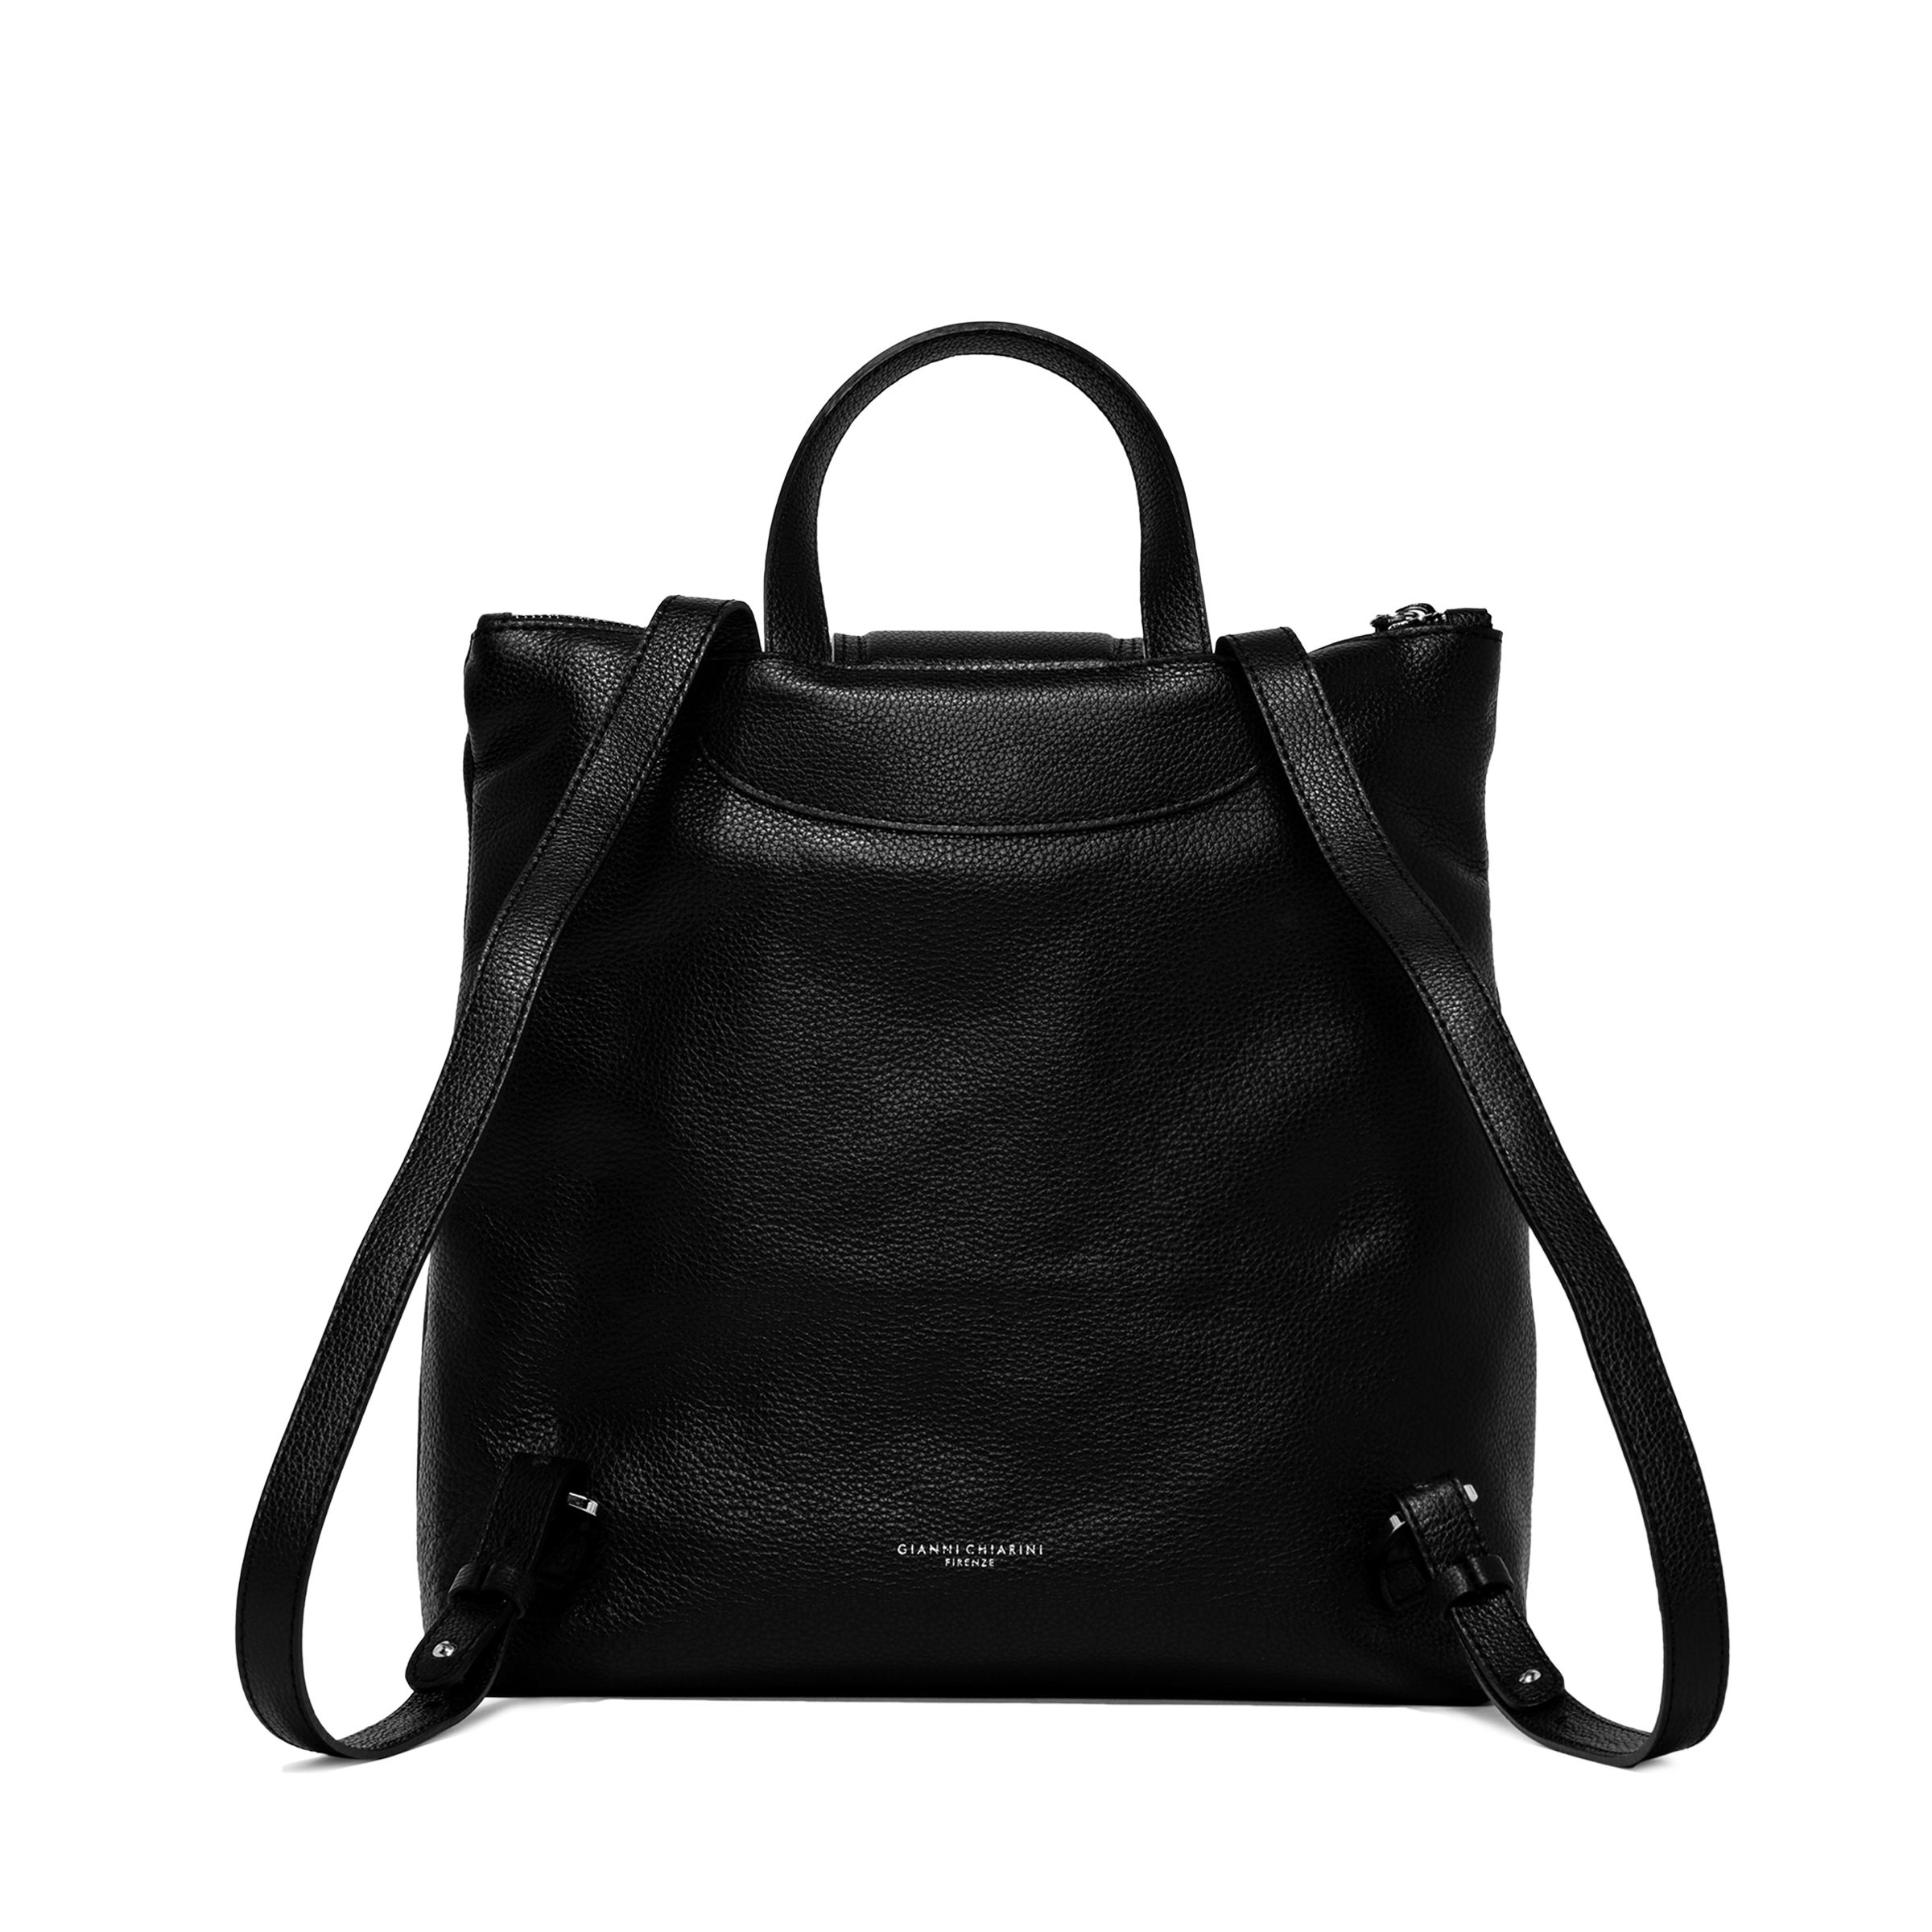 Gianni Chiarini - Jade leather backpack, Black, large image number 1